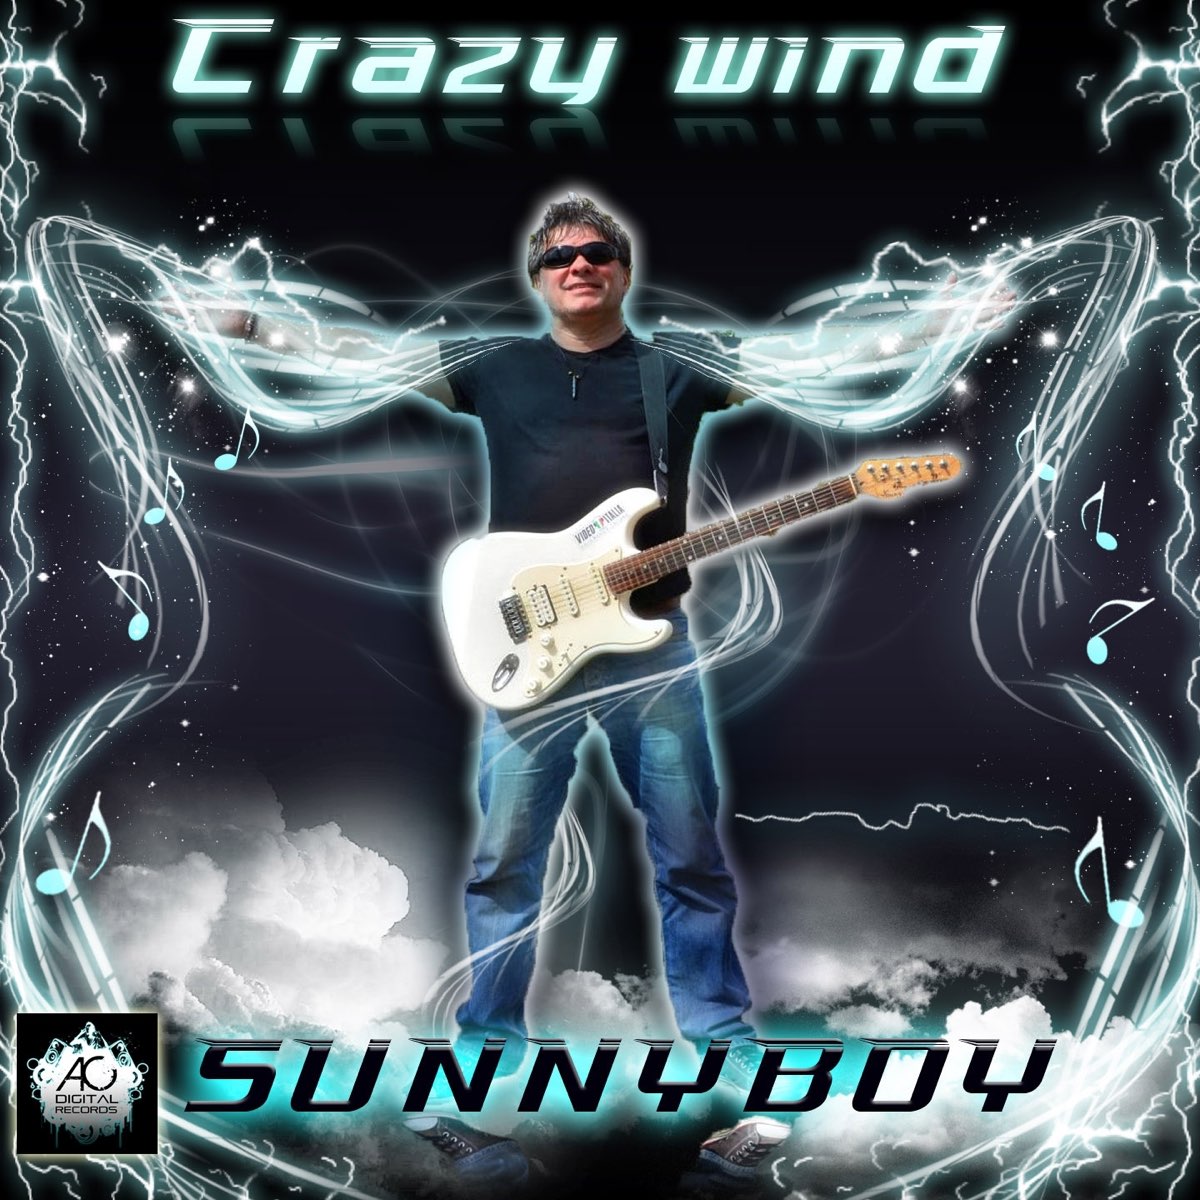 Sunnyboy. DJ Windy. Crazy Wind Hunters.